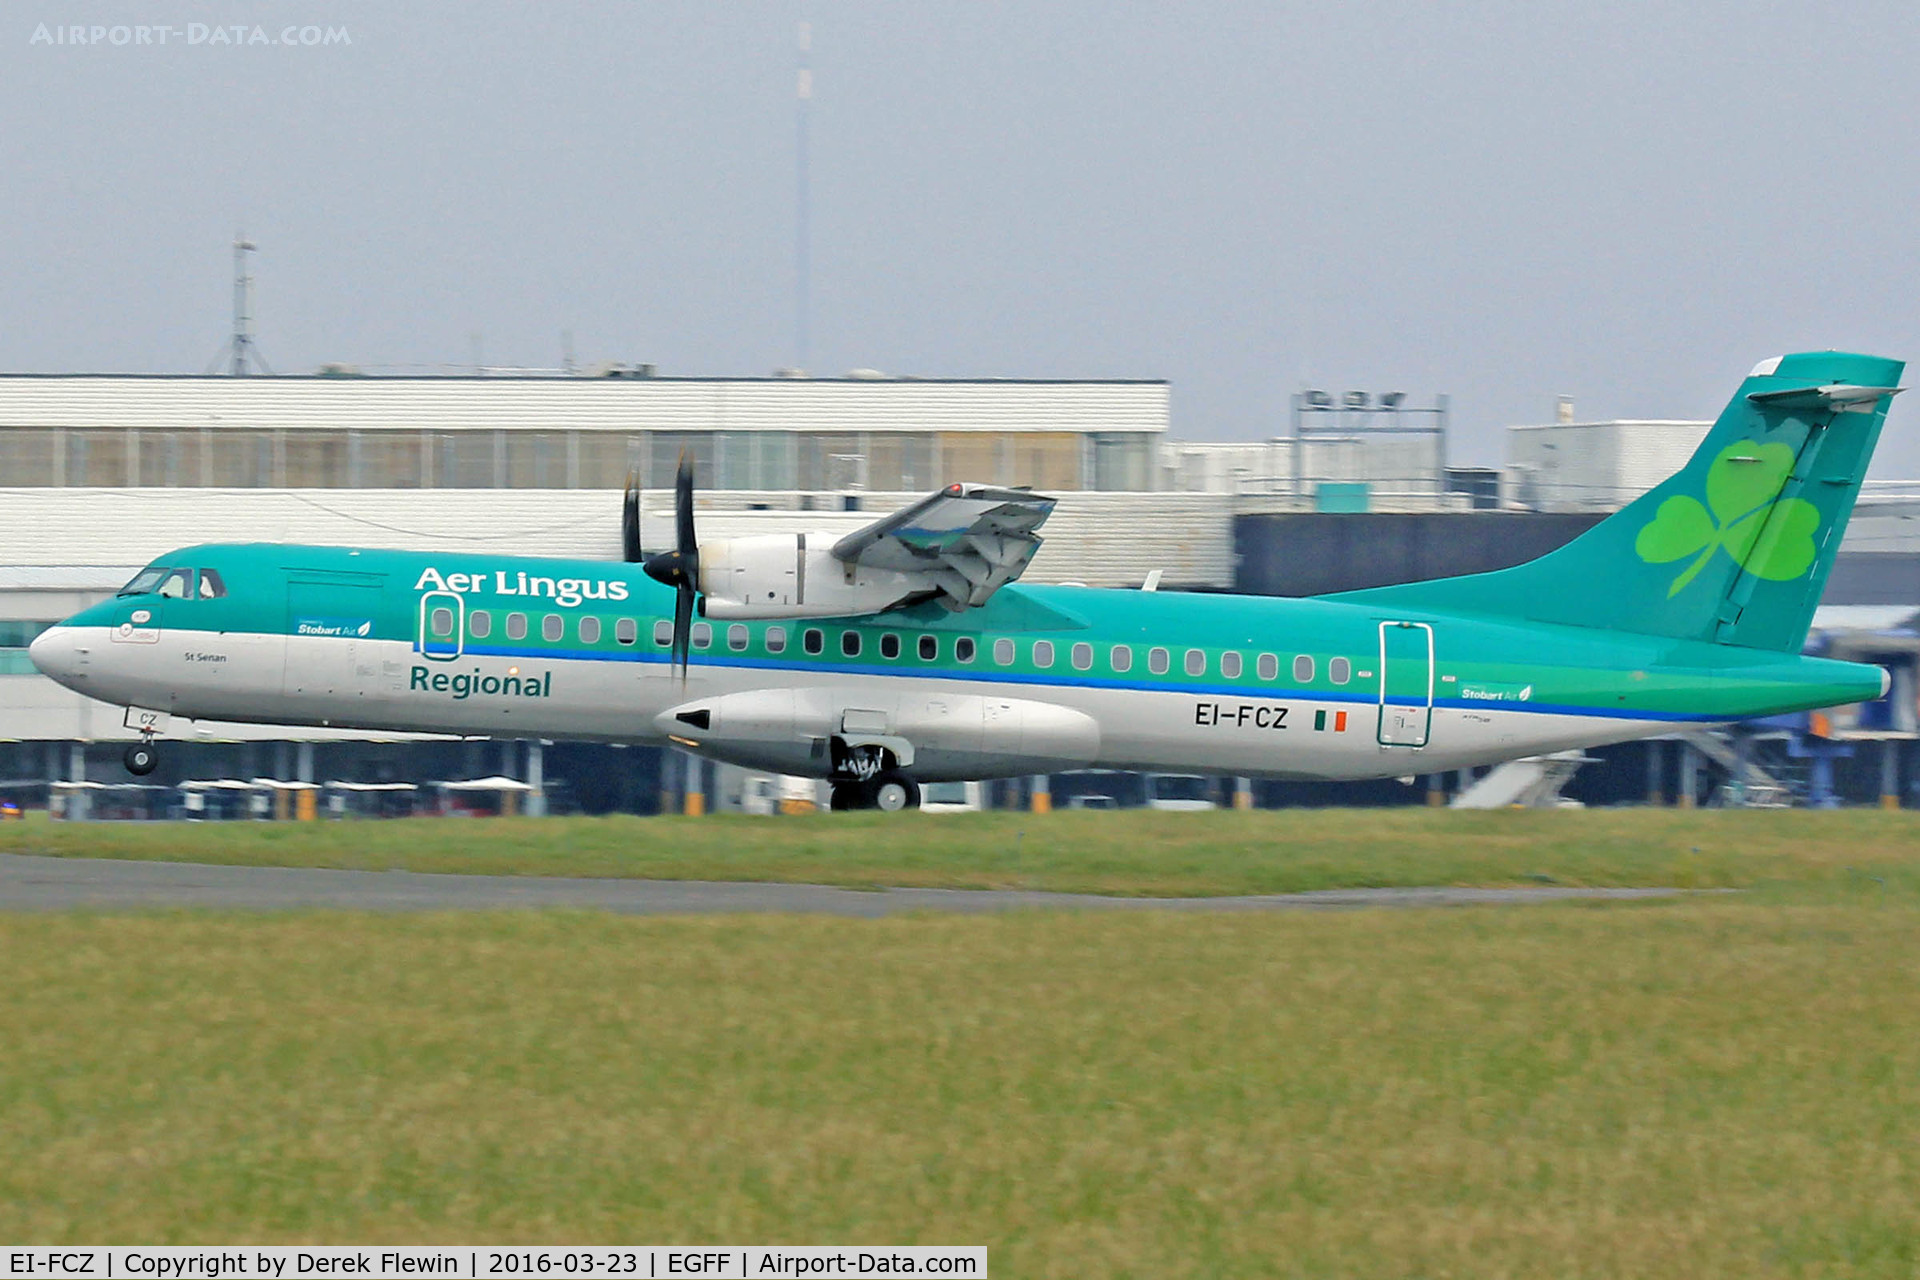 EI-FCZ, 2014 ATR 72-600 (72-212A) C/N 1159, ATR 72-600, Aer Lingus Regional Dublin based, call sign Stobart 91CW, previously F-WWEX, seen departing runway 30 en-route RTB.